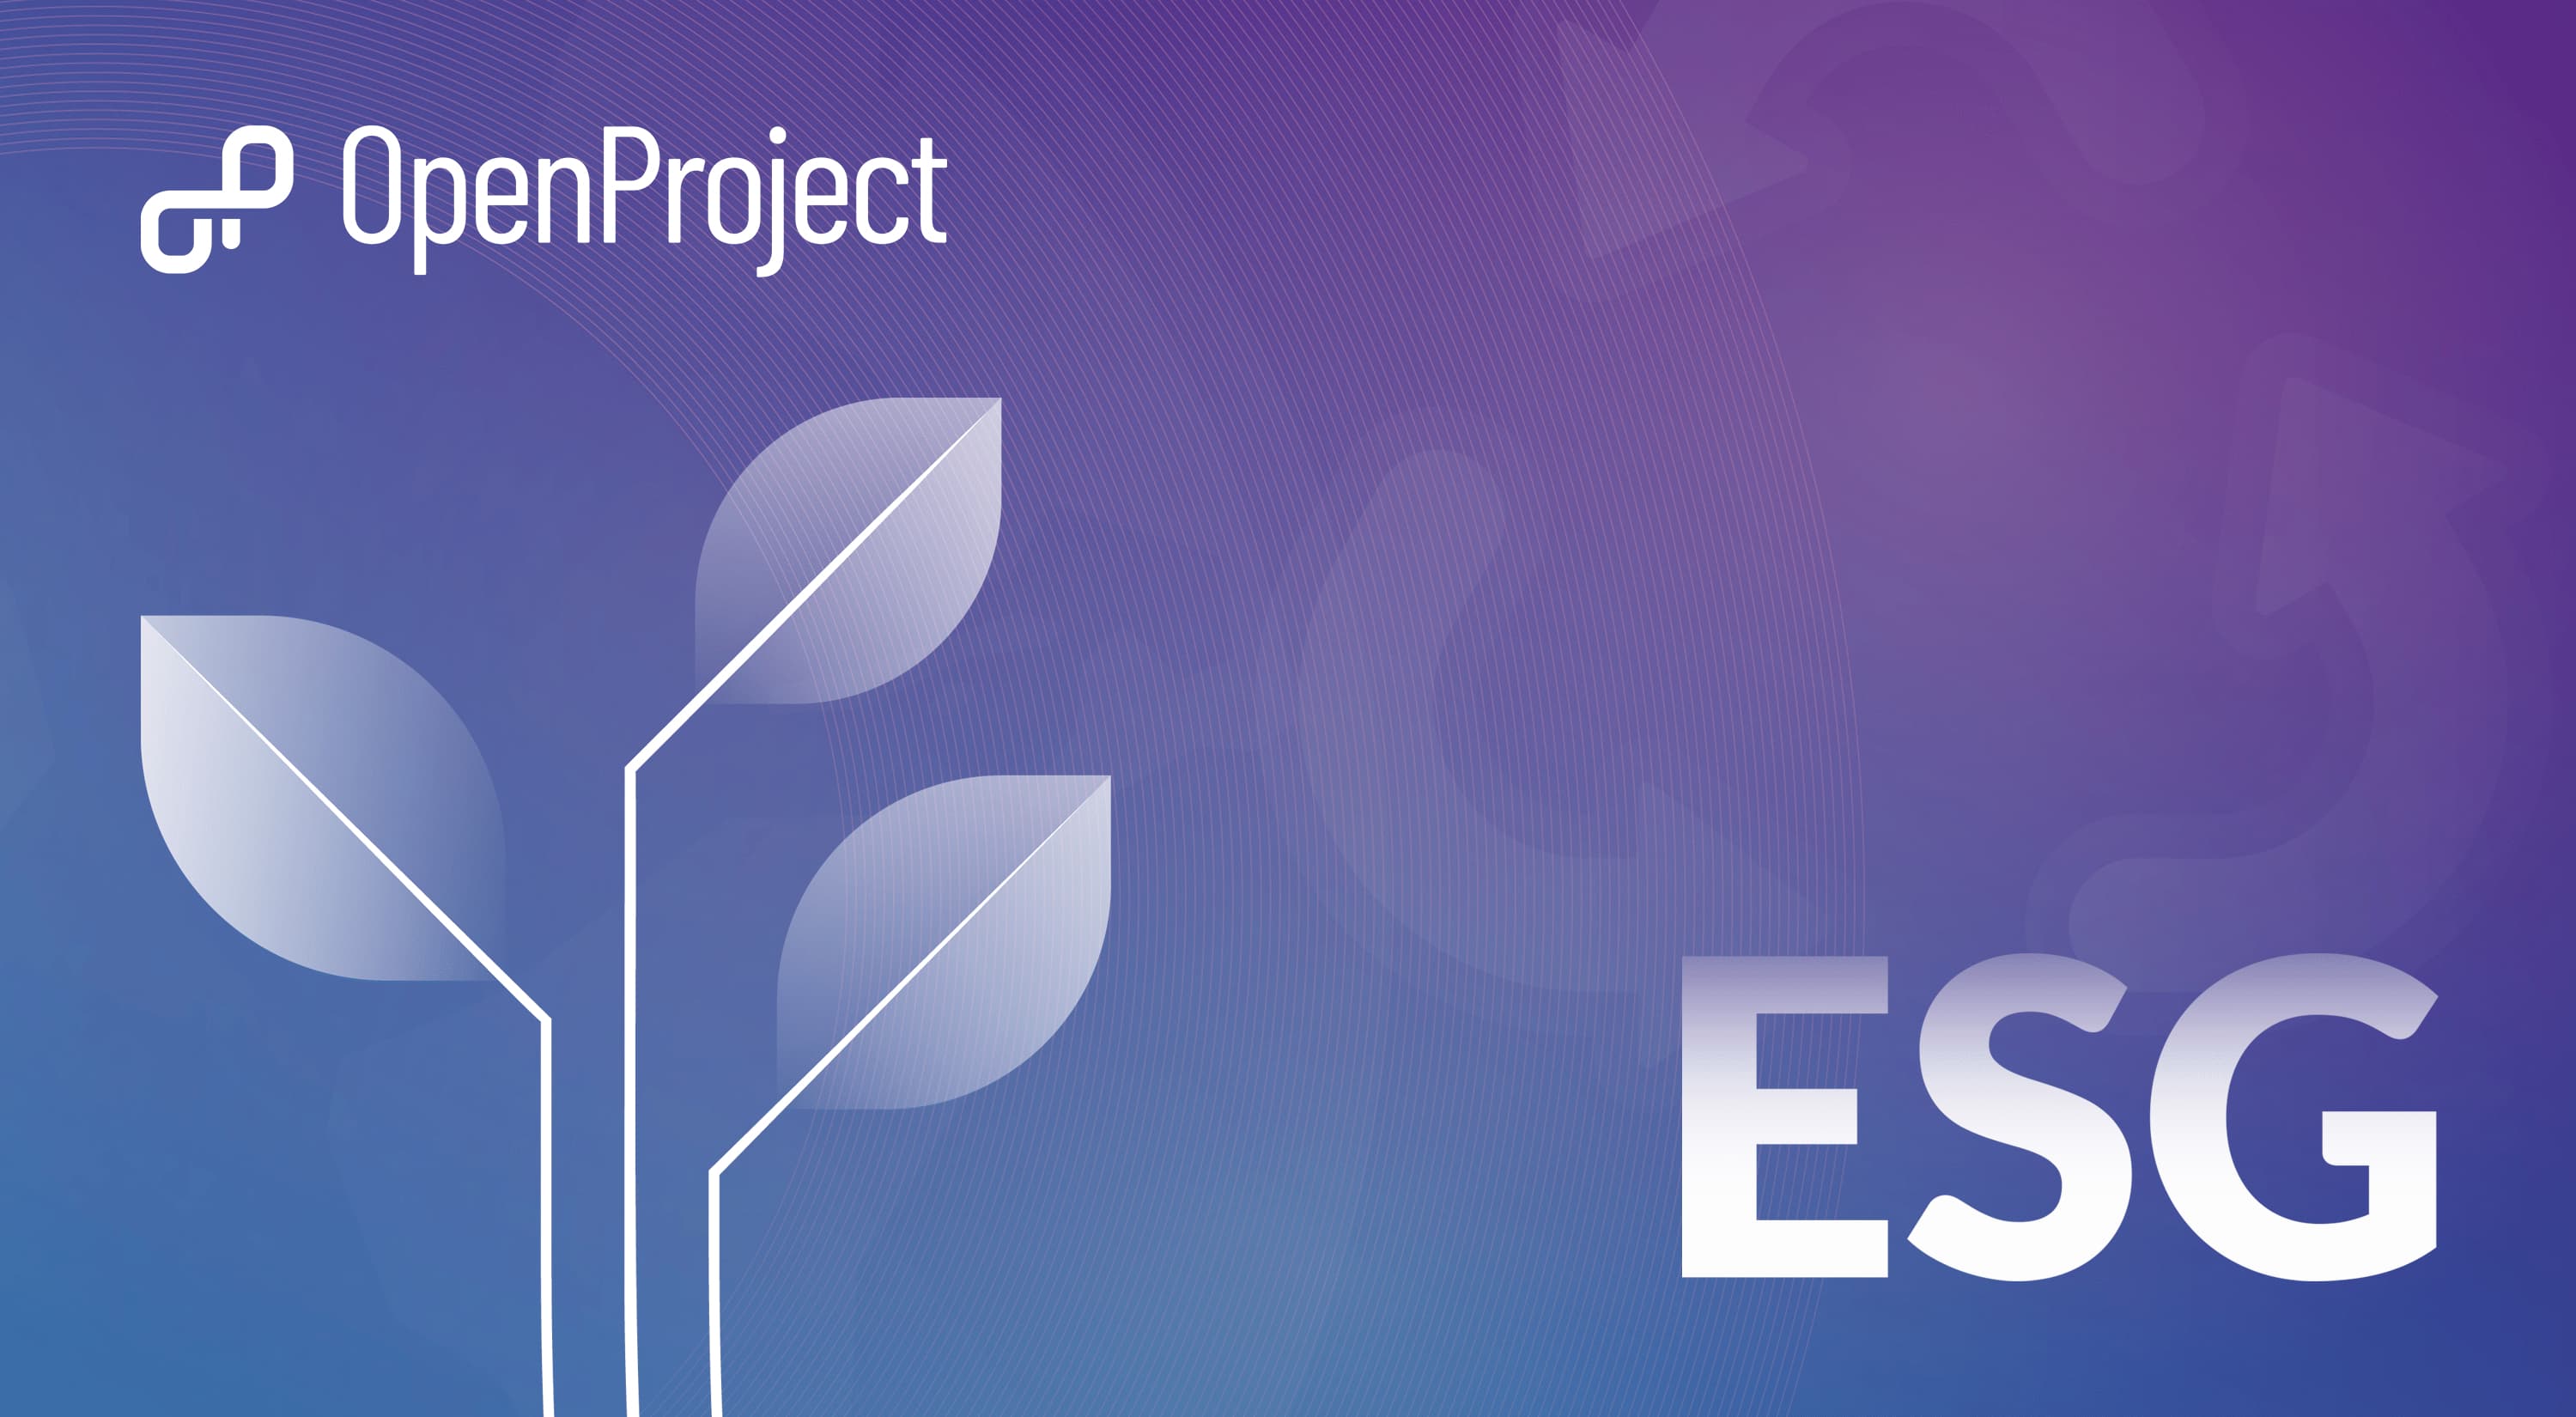 OpenProject ESG commitment